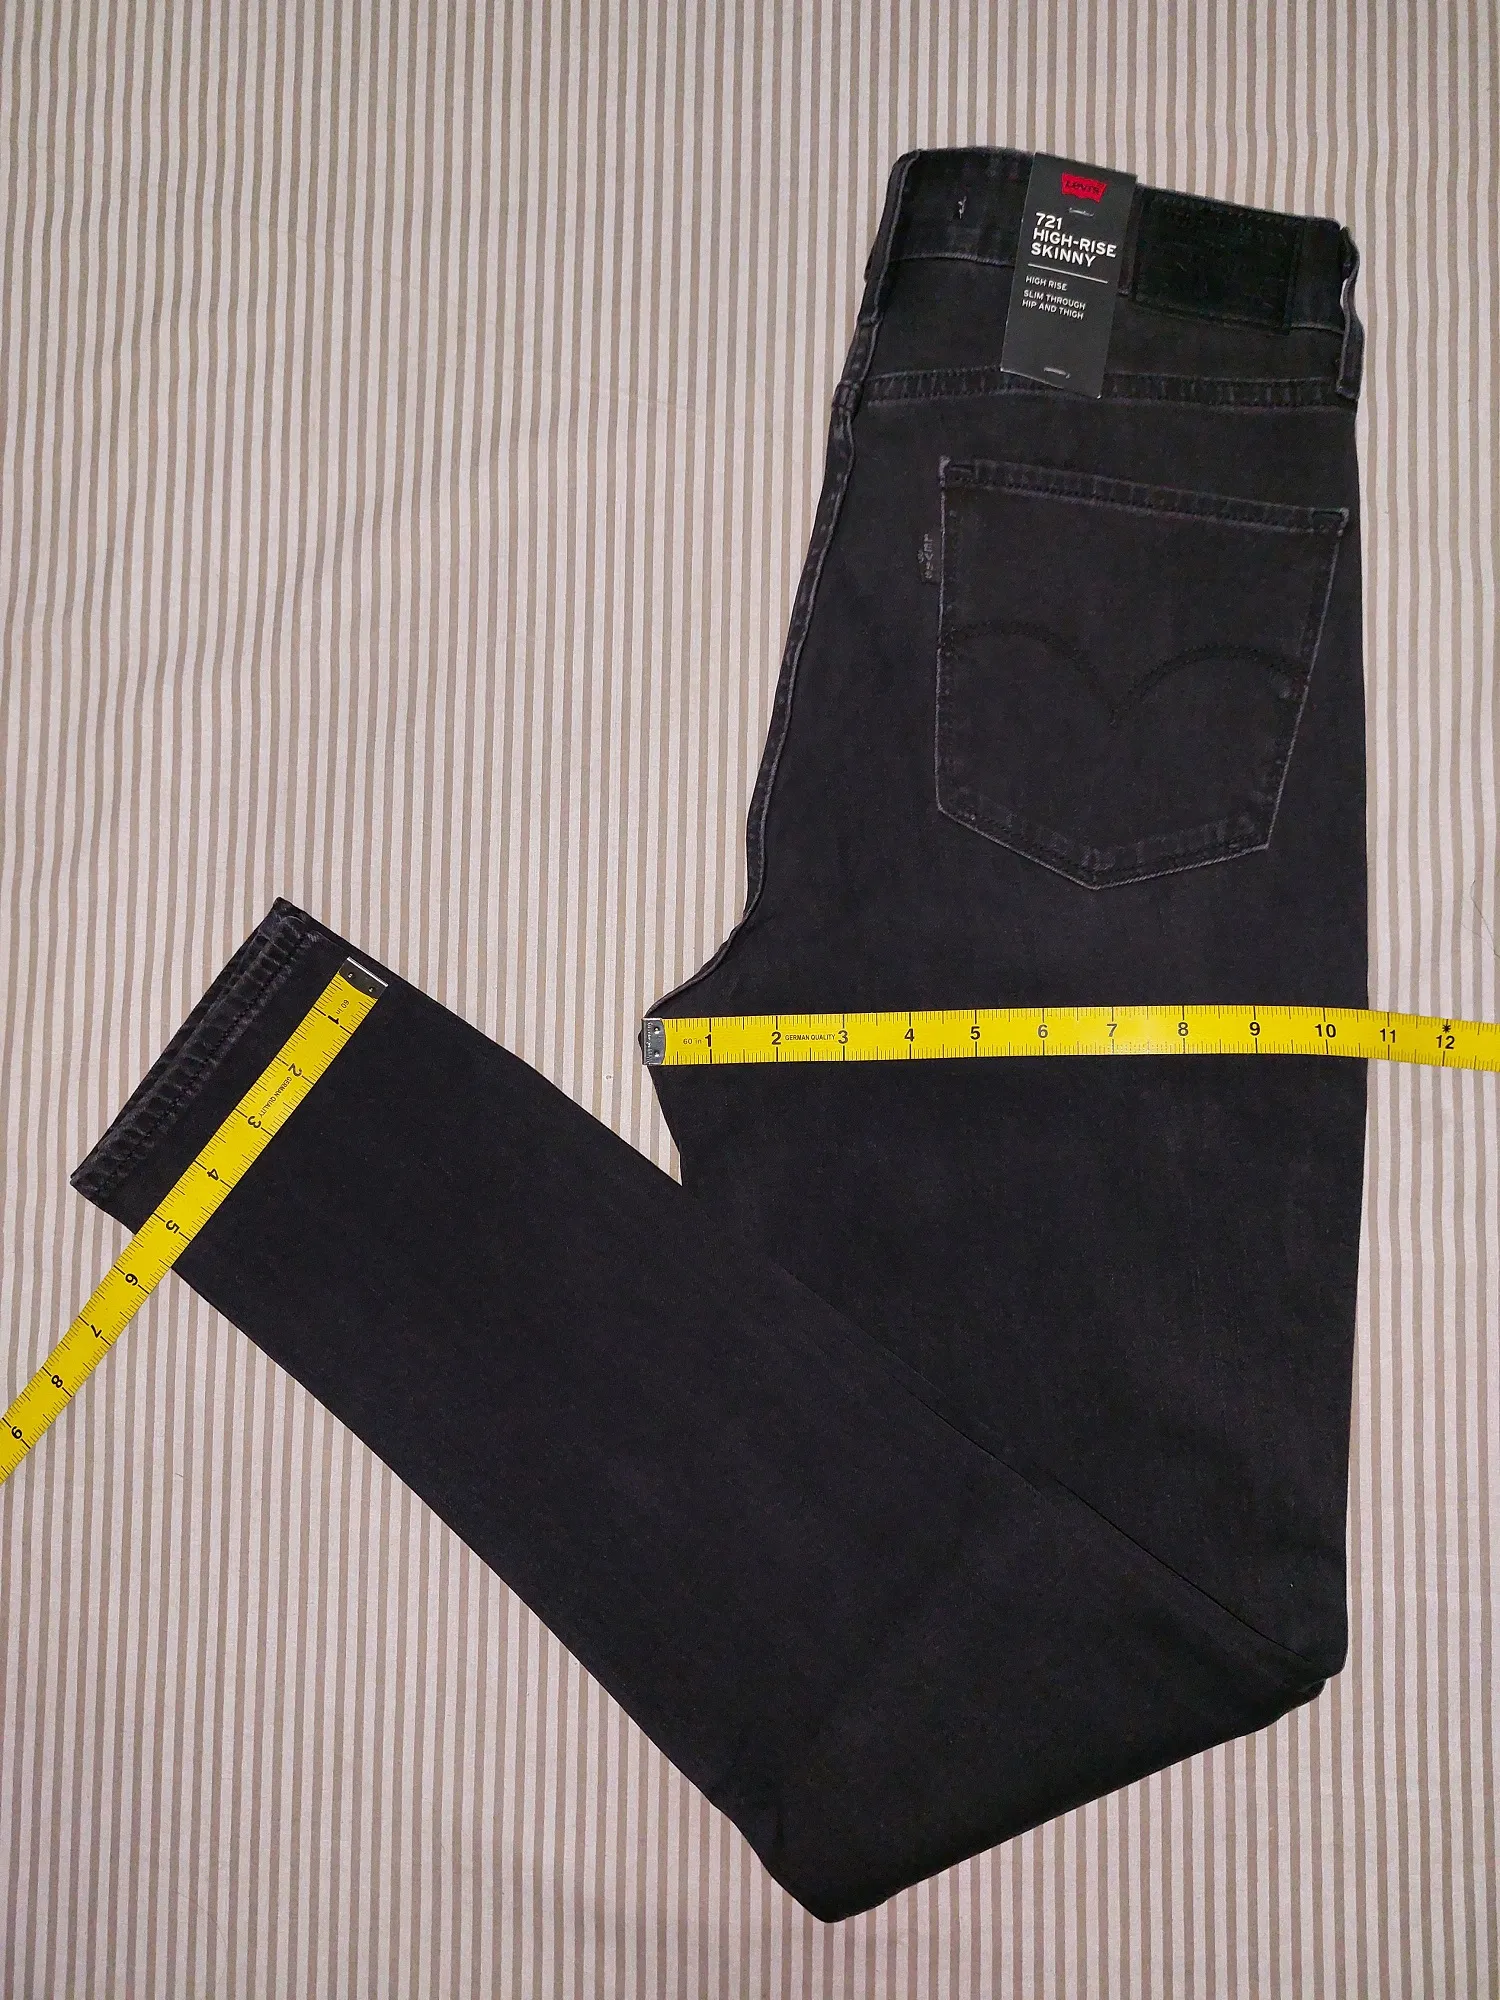 Levi's Premium 721, High Rise Skinny Fit Jeans, PC9-18882-0274, W30 L30 |  Lazada PH